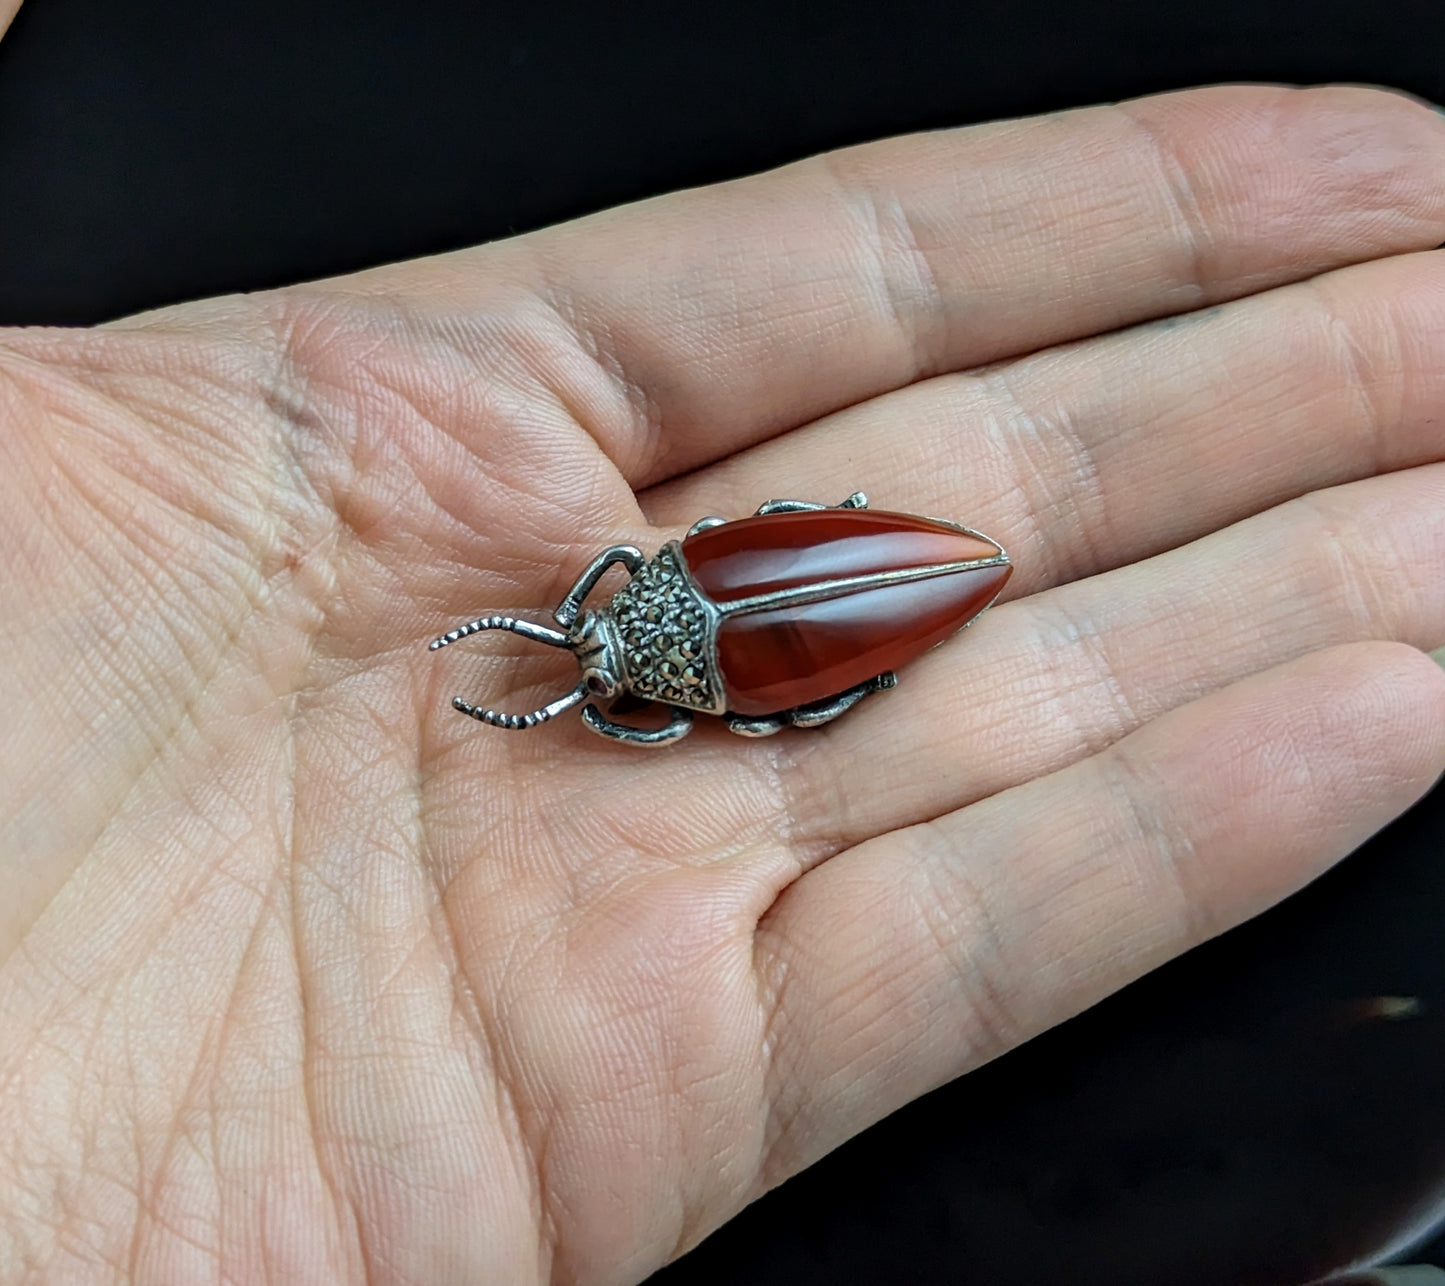 Vintage Carnelian and Marcasite beetle brooch, sterling silver